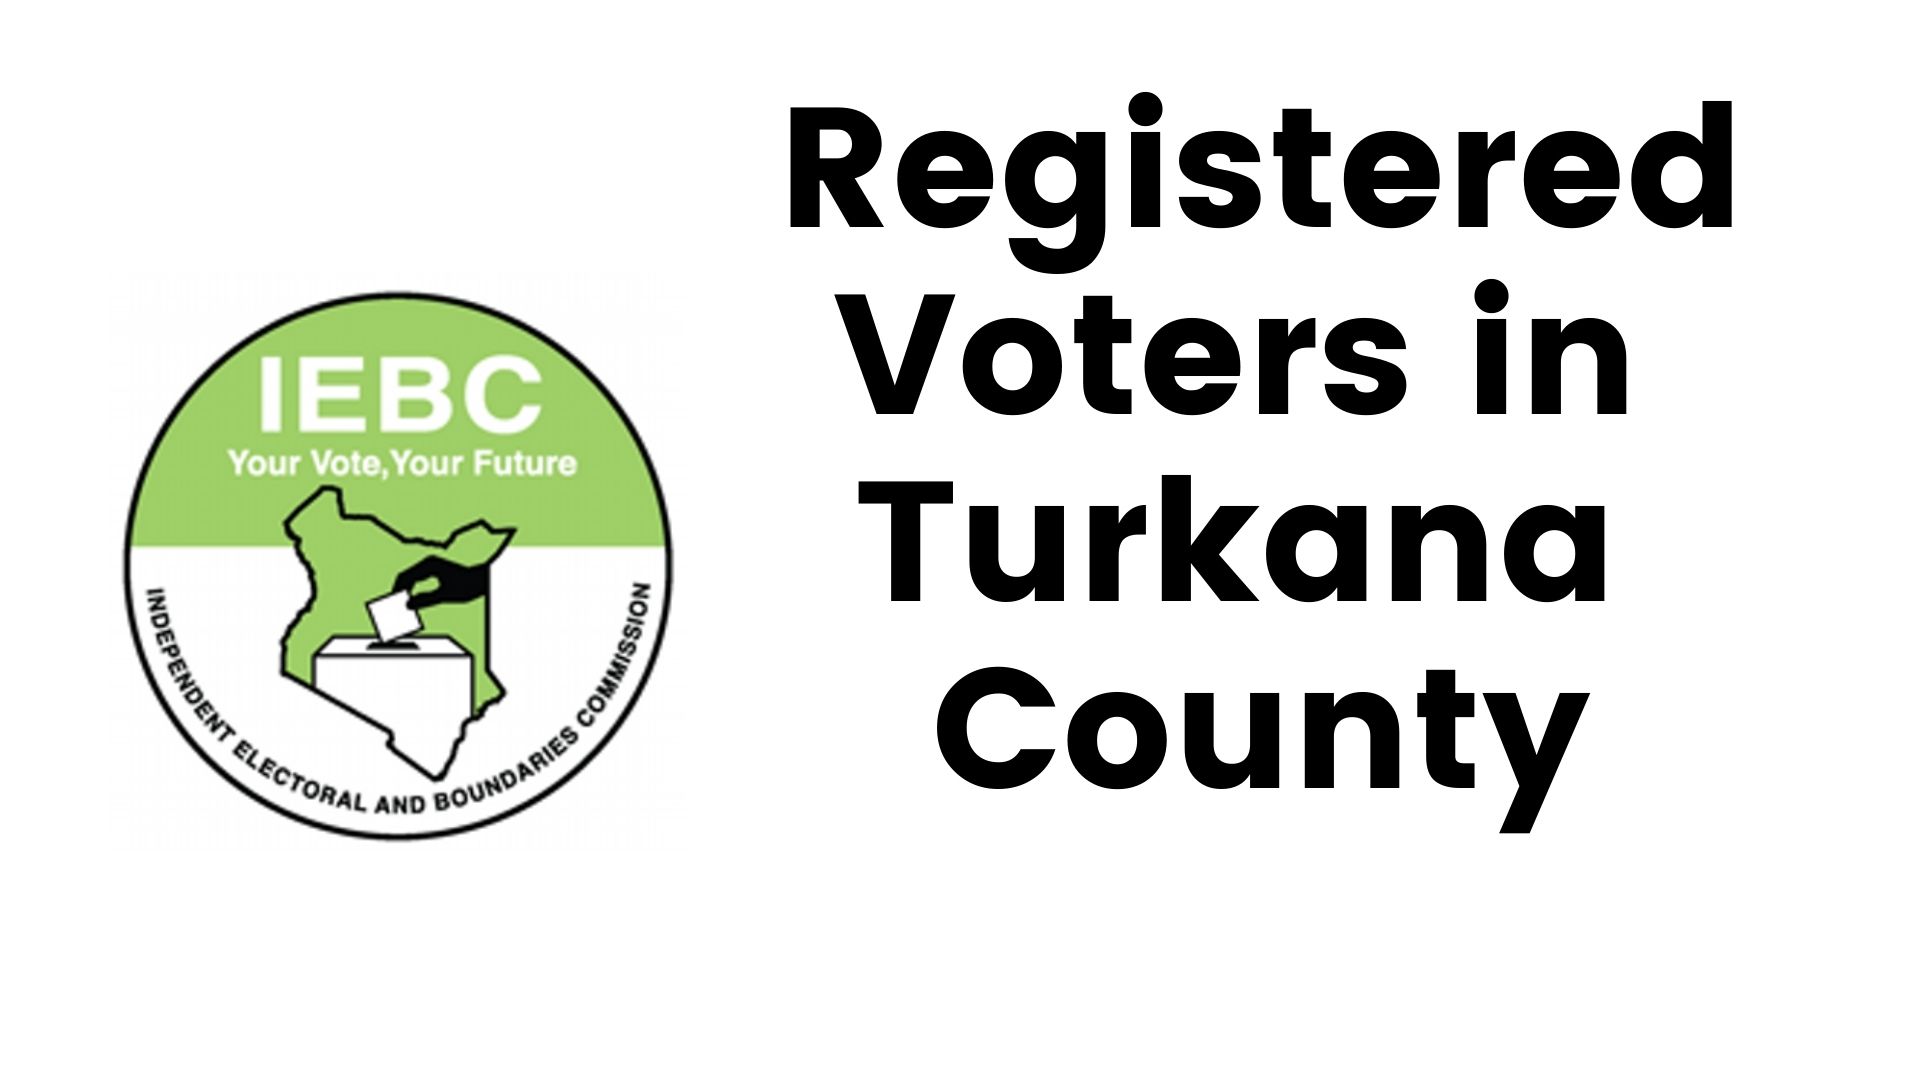 IEBC Turkana County Registered Voters